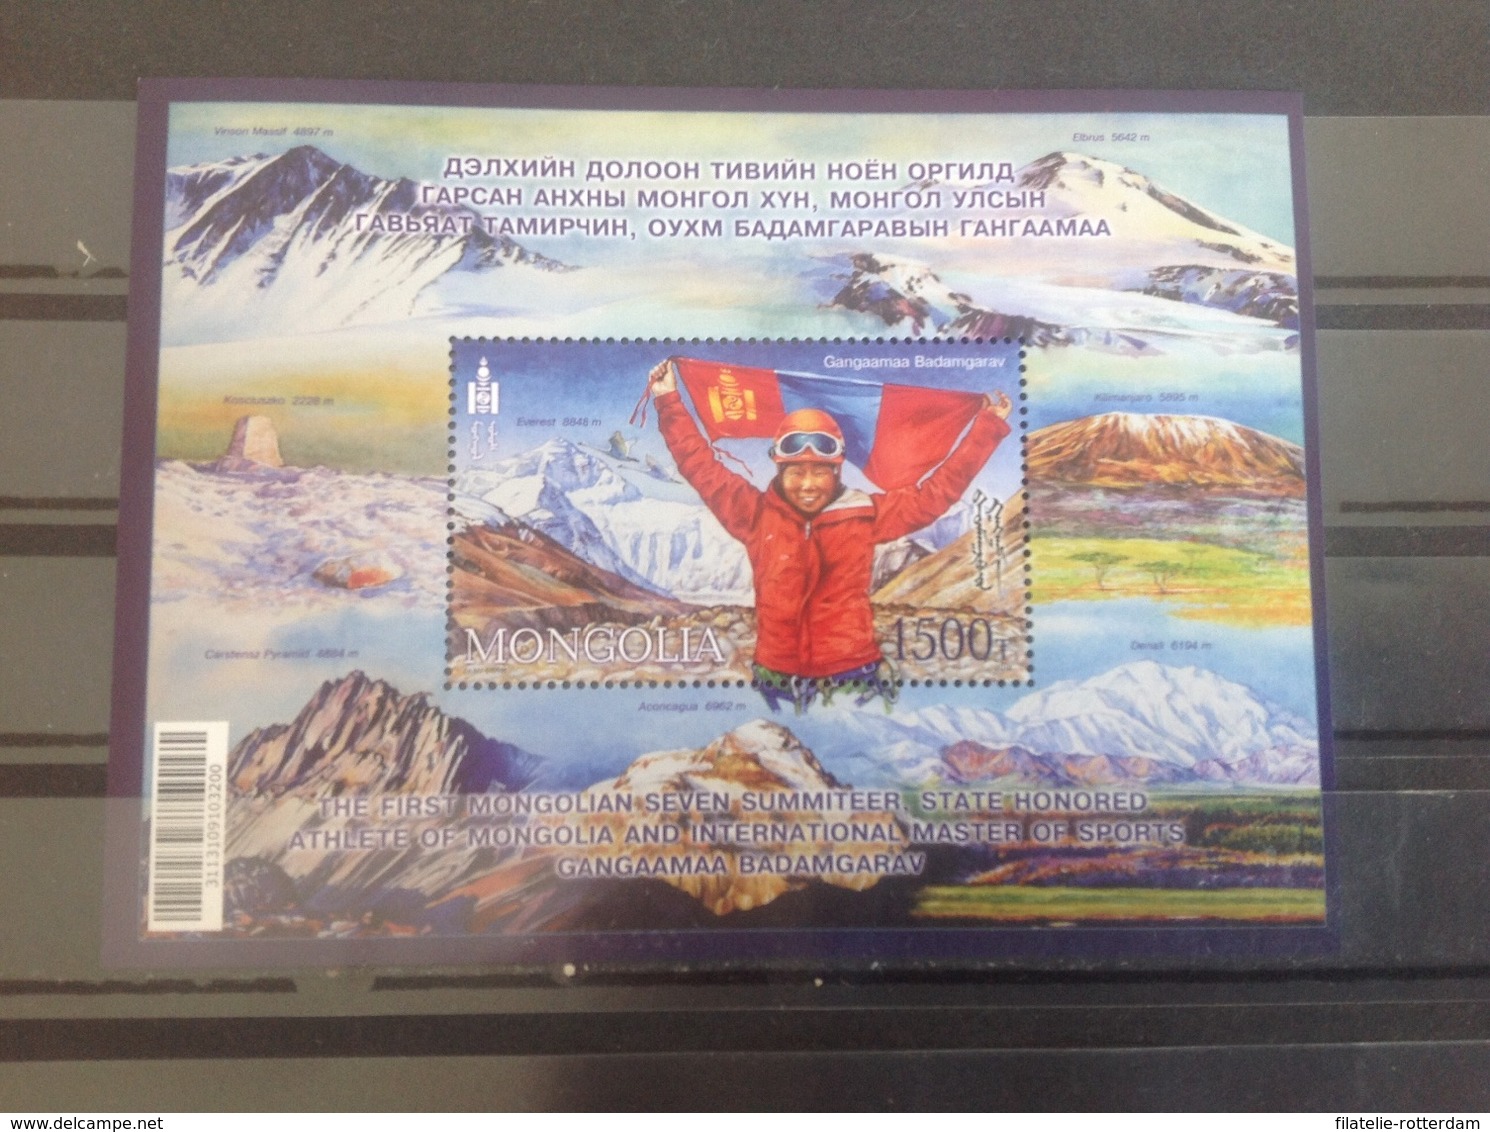 Mongolië / Mongolia - Postfris / MNH - Sheet First Mongolian 7 Summiteer 2018 - Mongolei